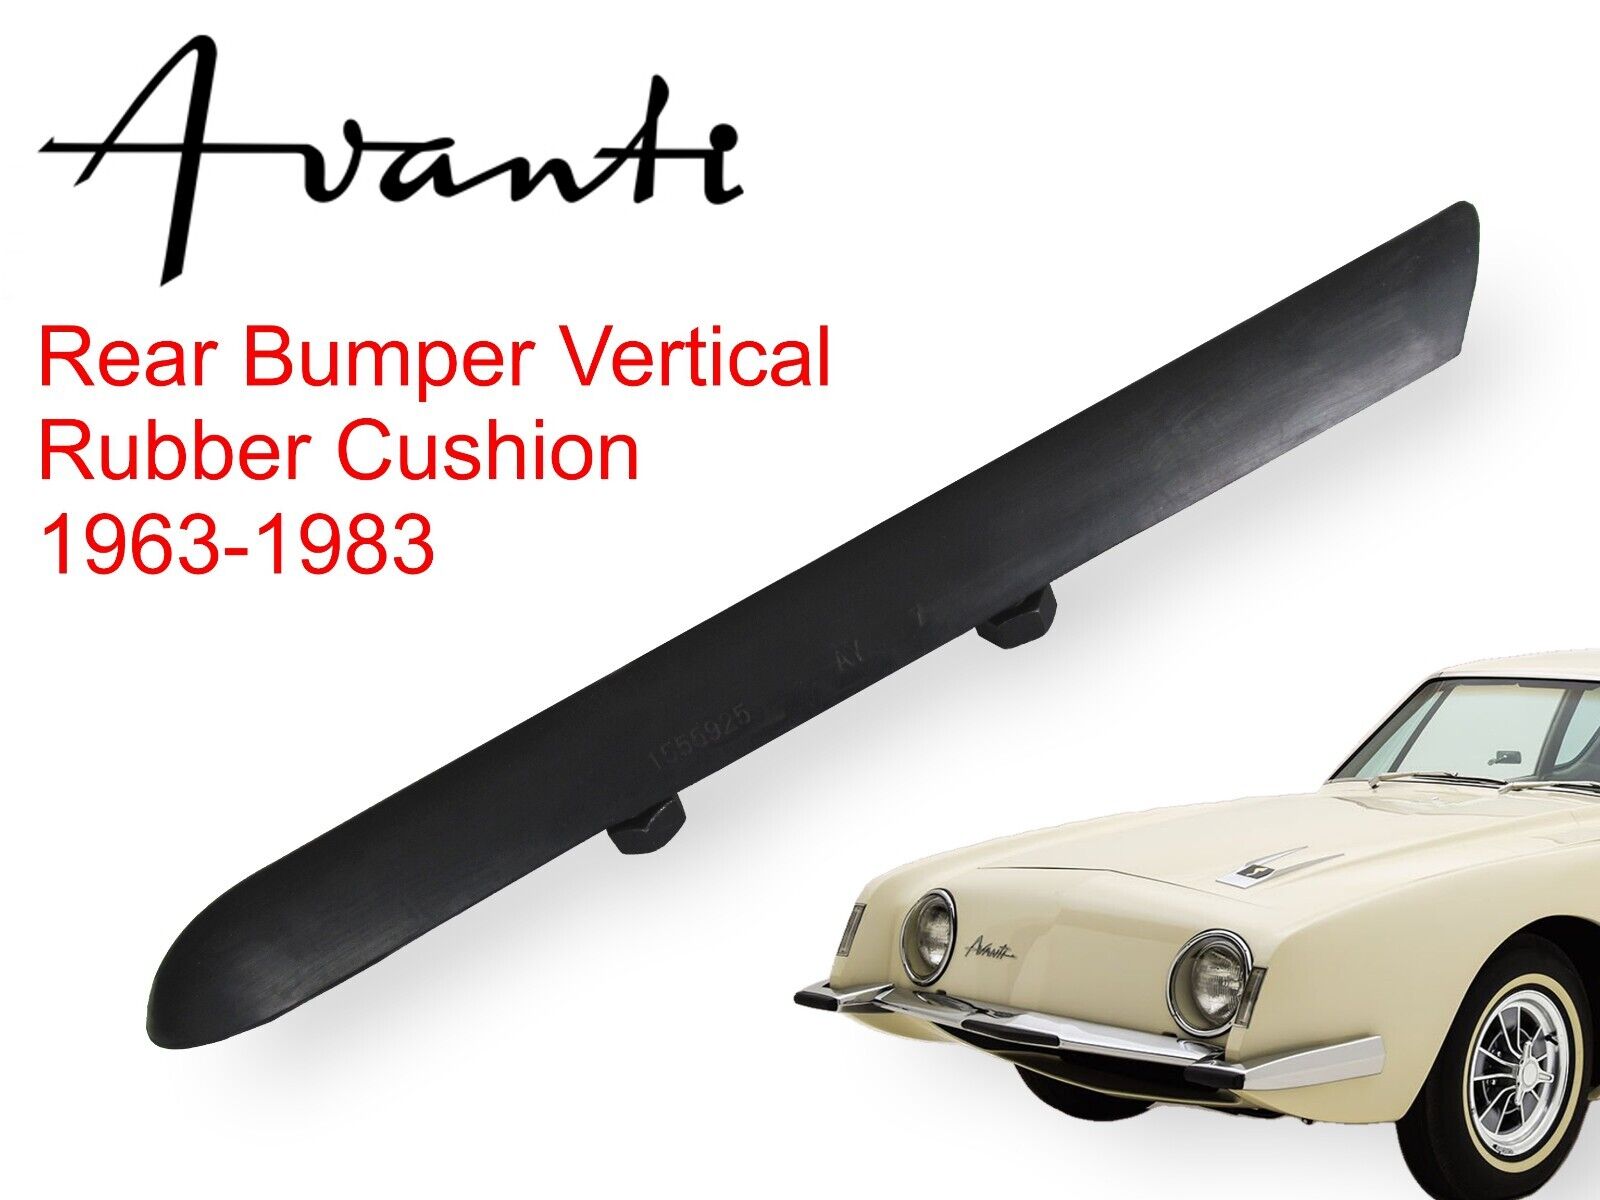 Studebaker Avanti Avanti II Rear Bumper Vertical Rubber Cushion - New